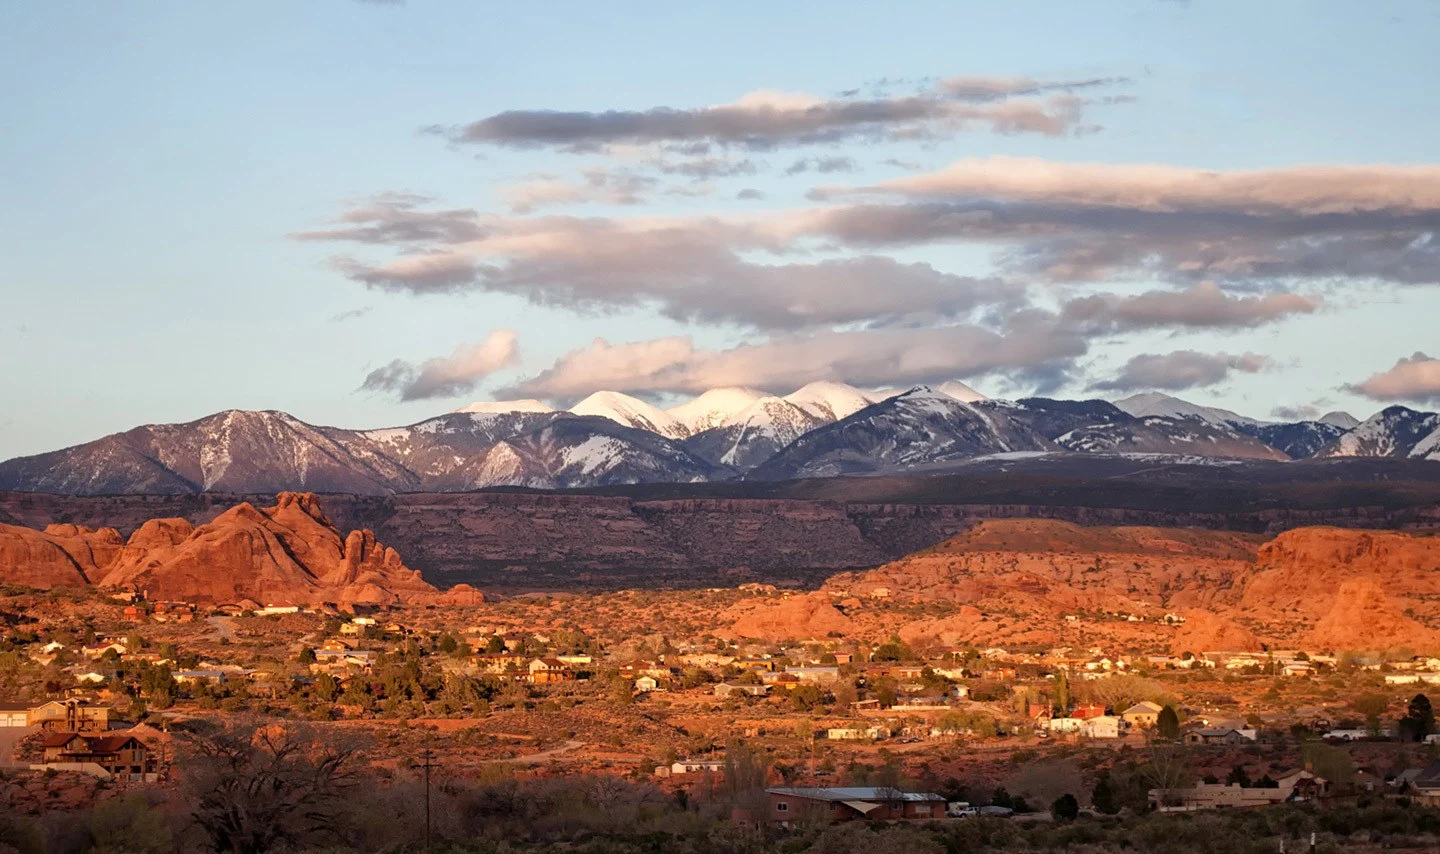 Sunset views from Moab, Utah